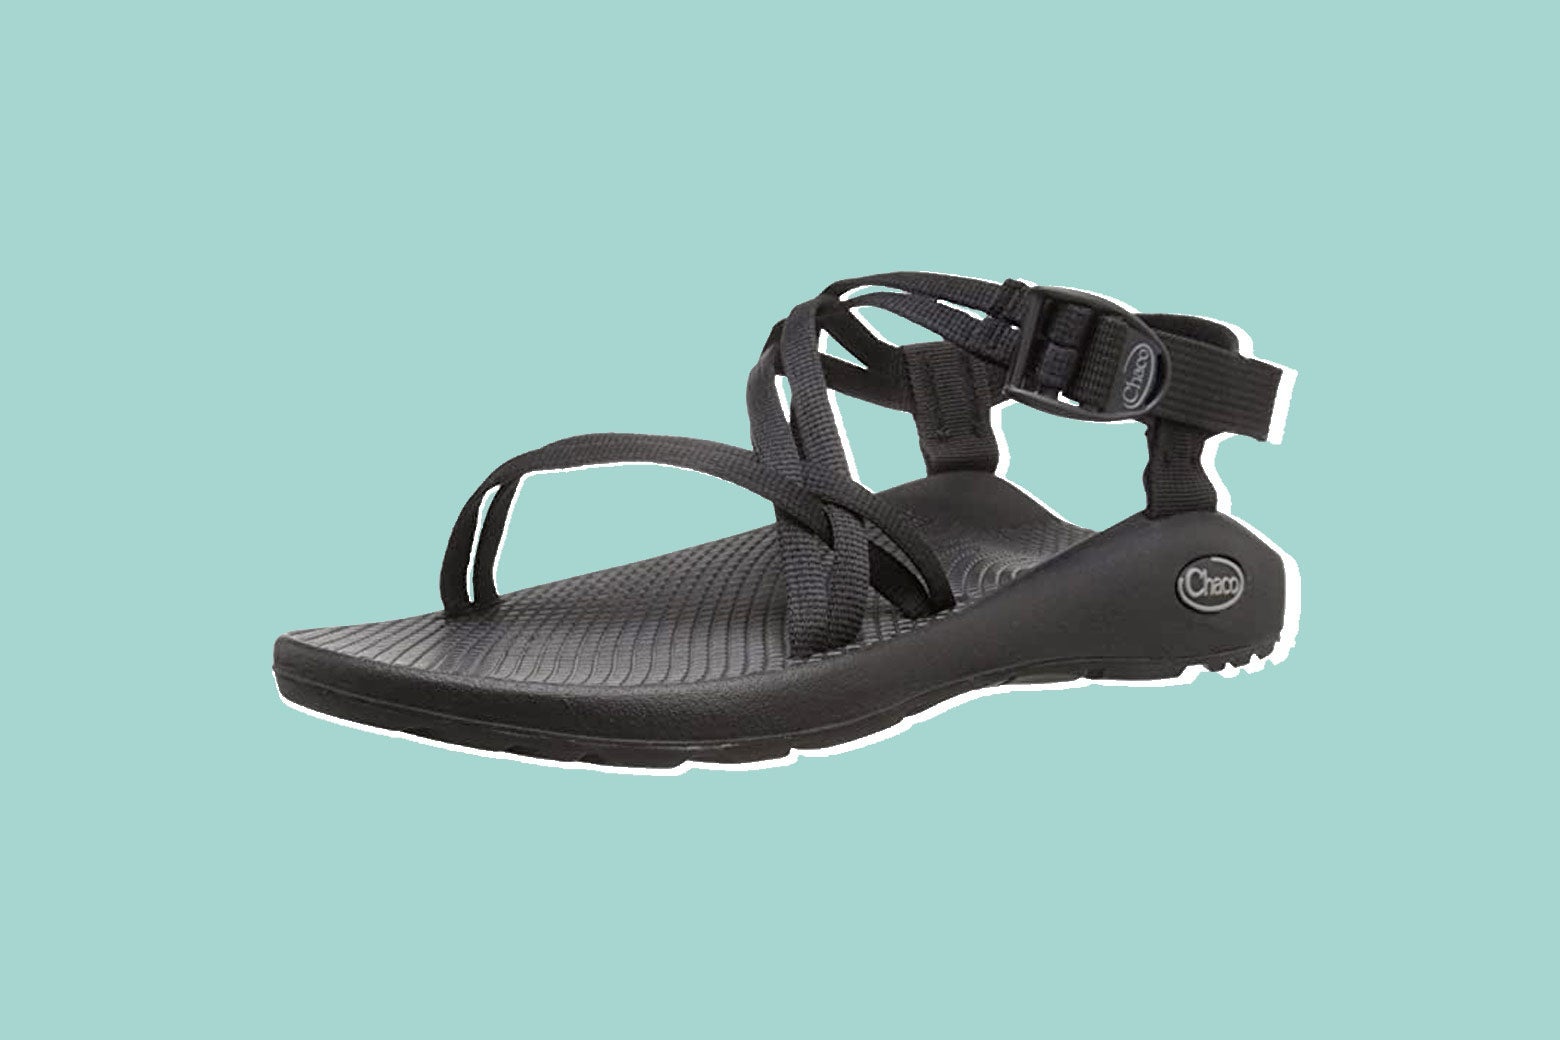 Black Chaco sandals